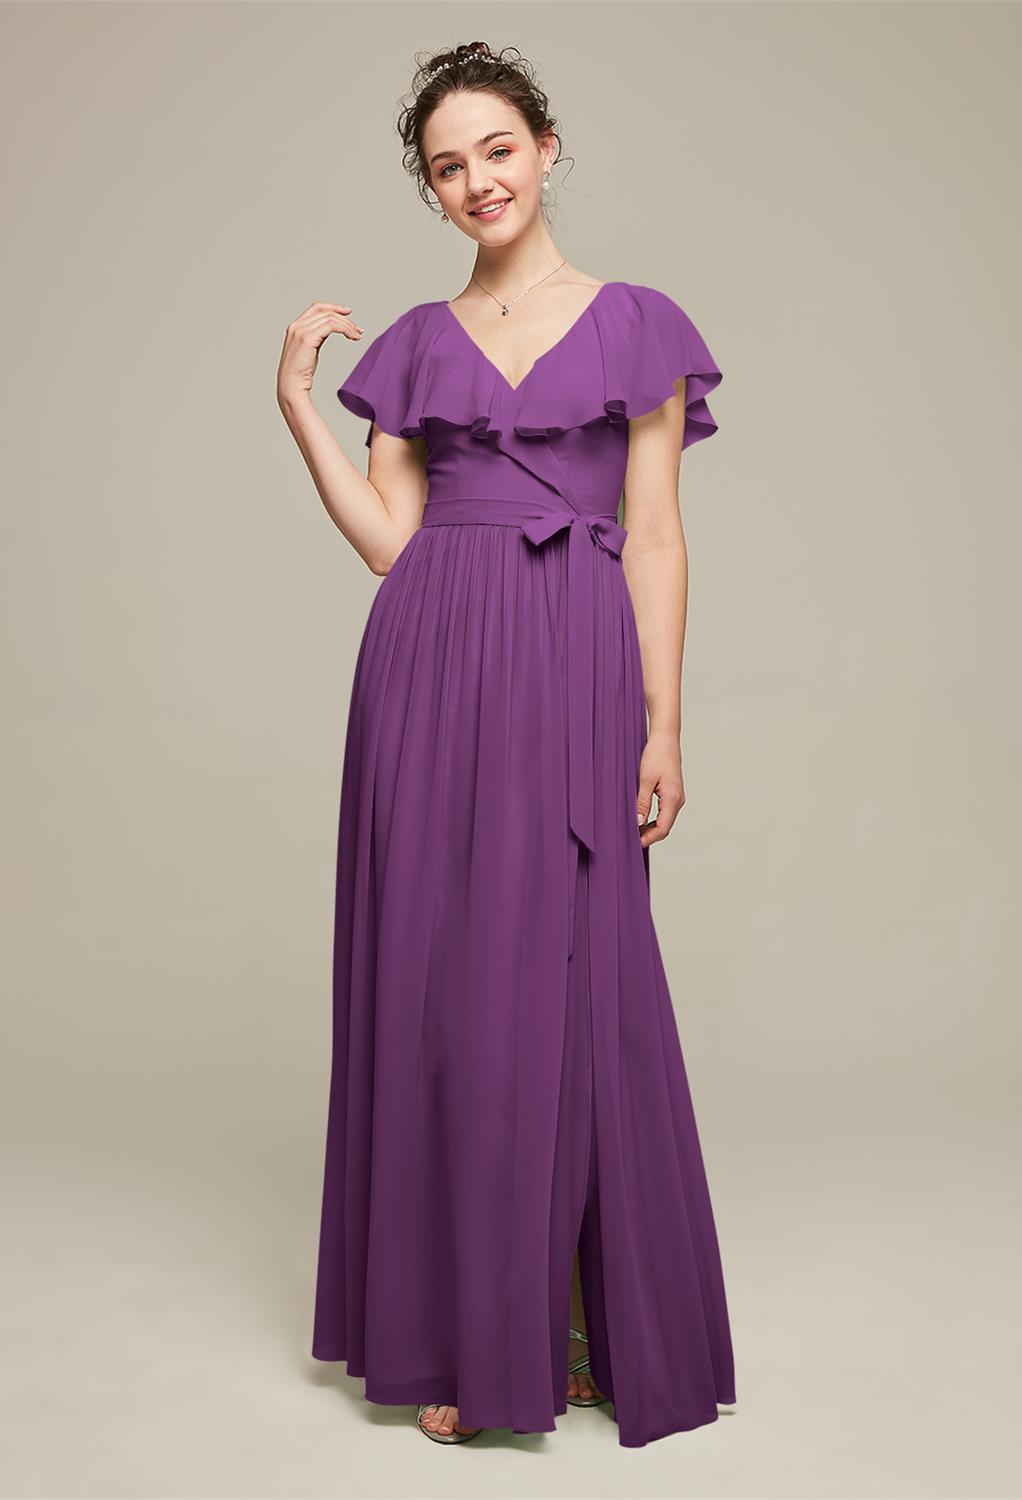 Plus Size Purple Wedding Dress Bethany Dress